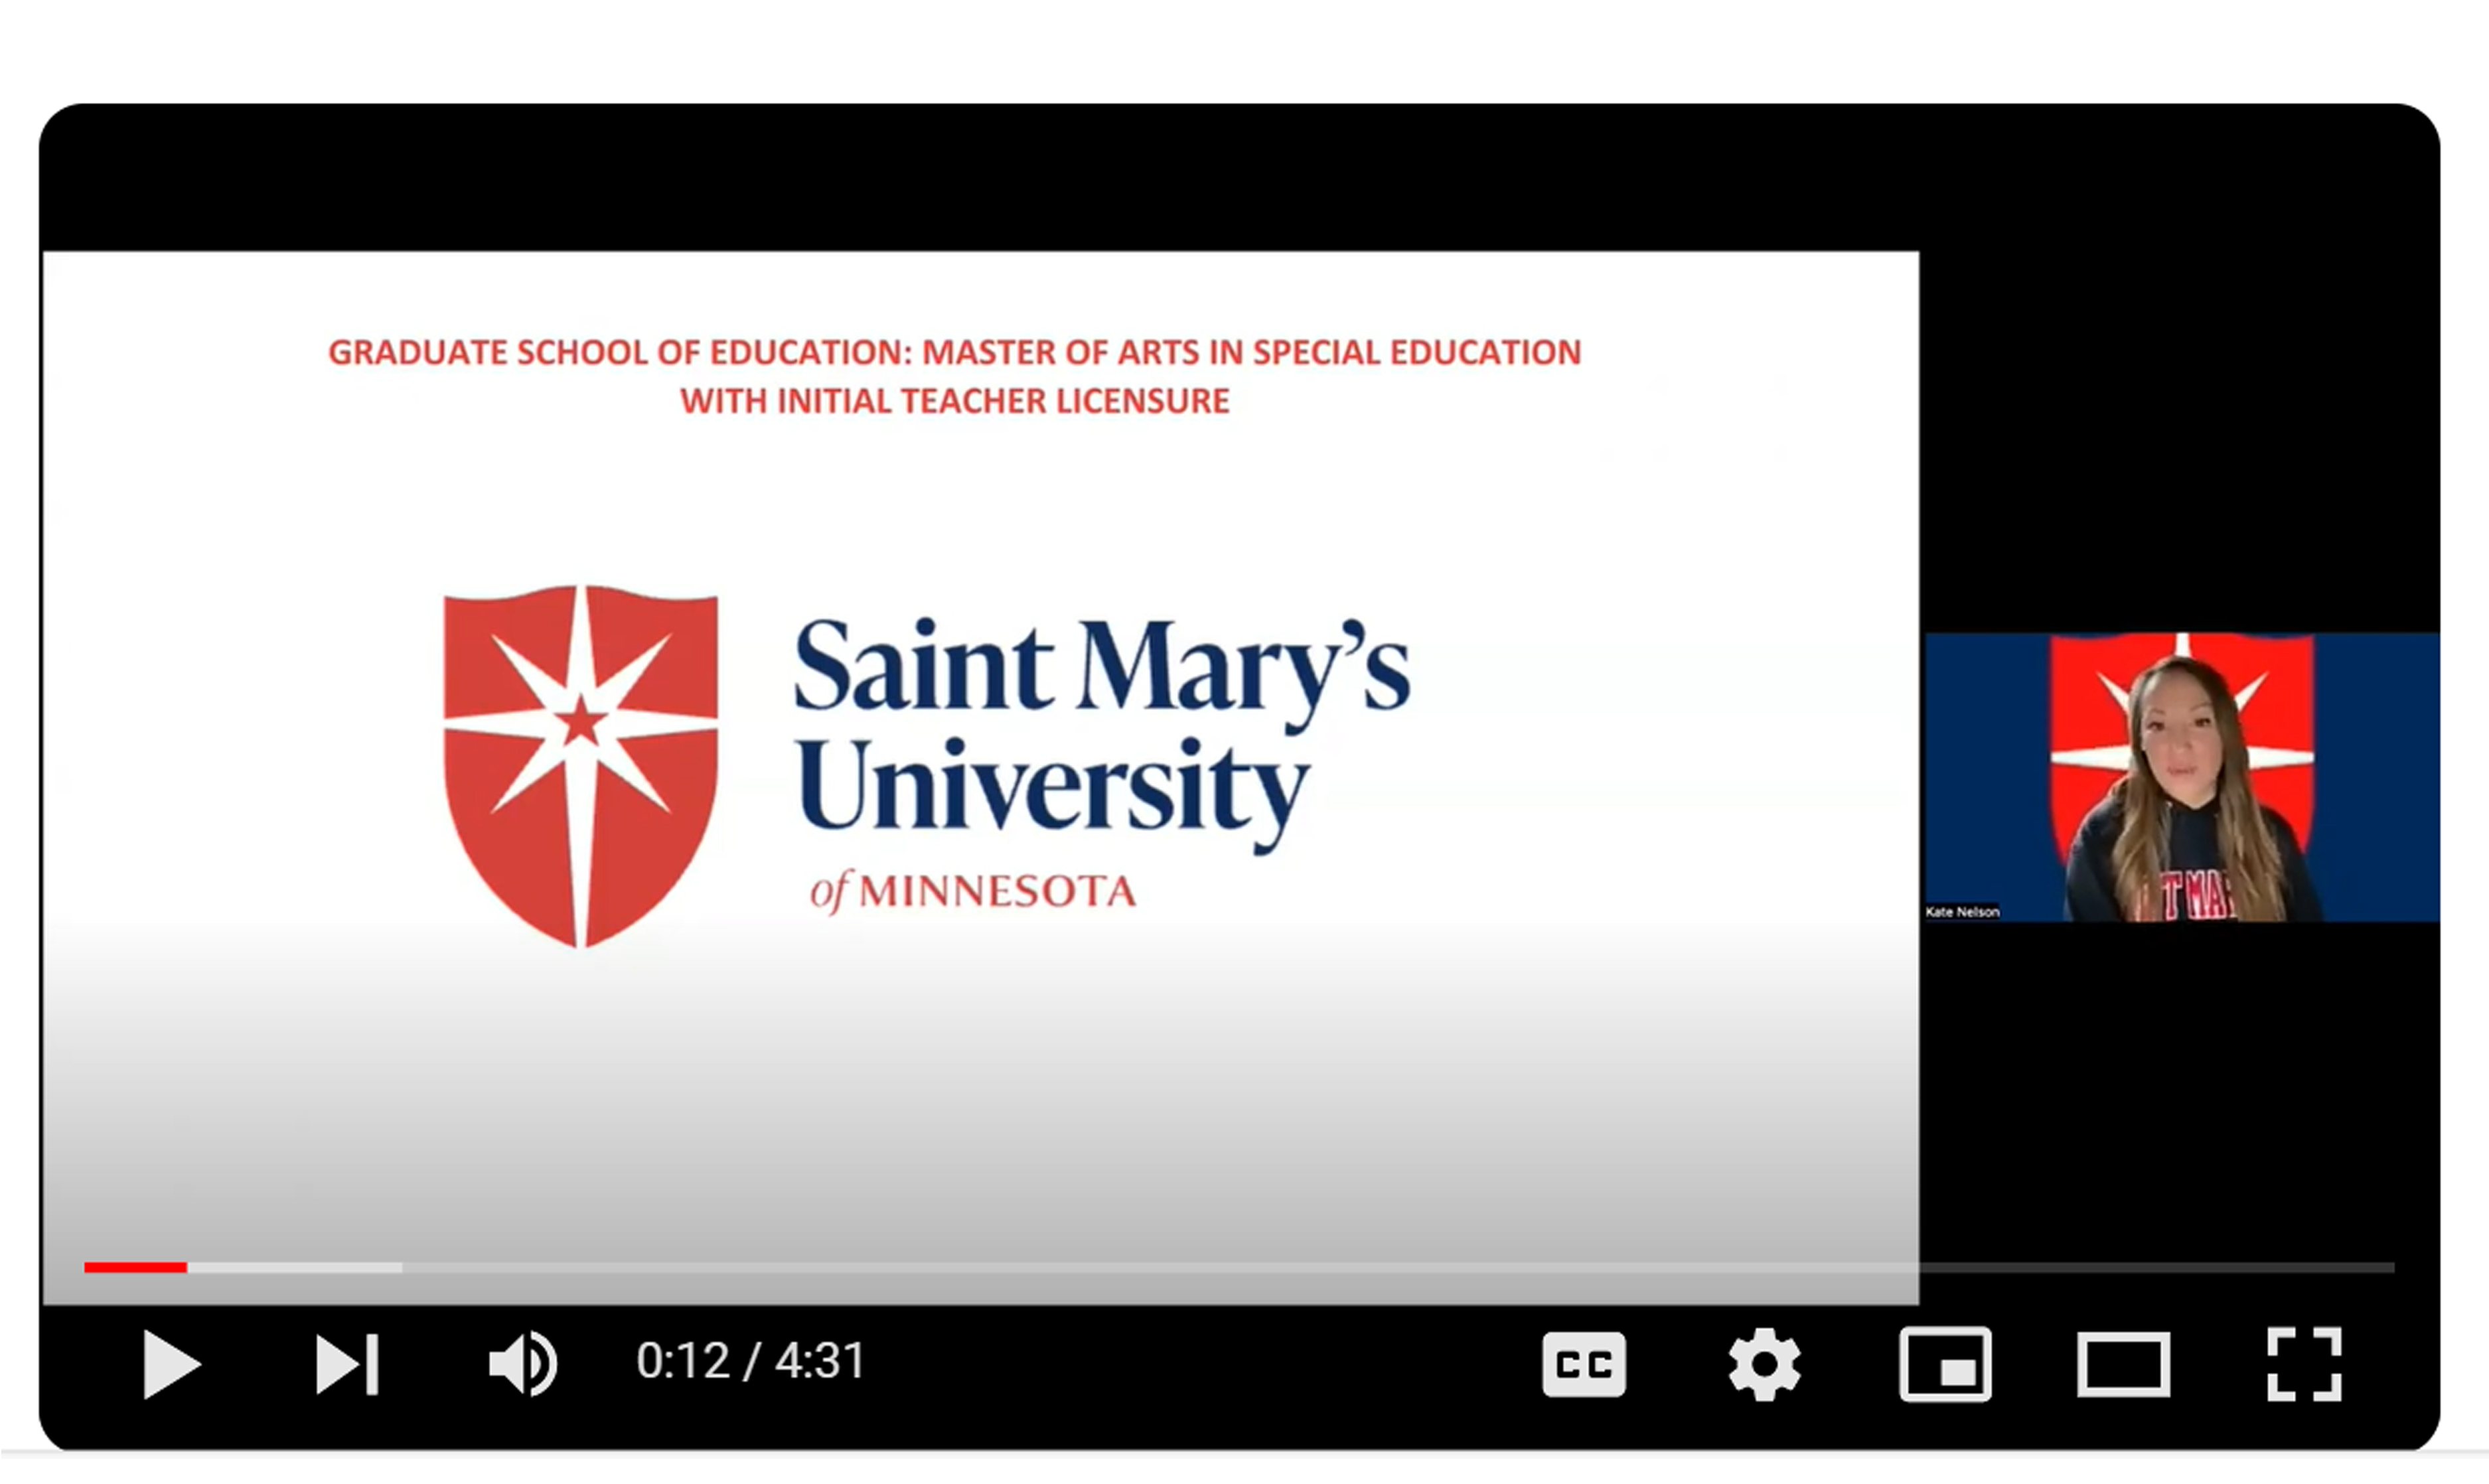 Special Education Programs at Saint Mary's University, video